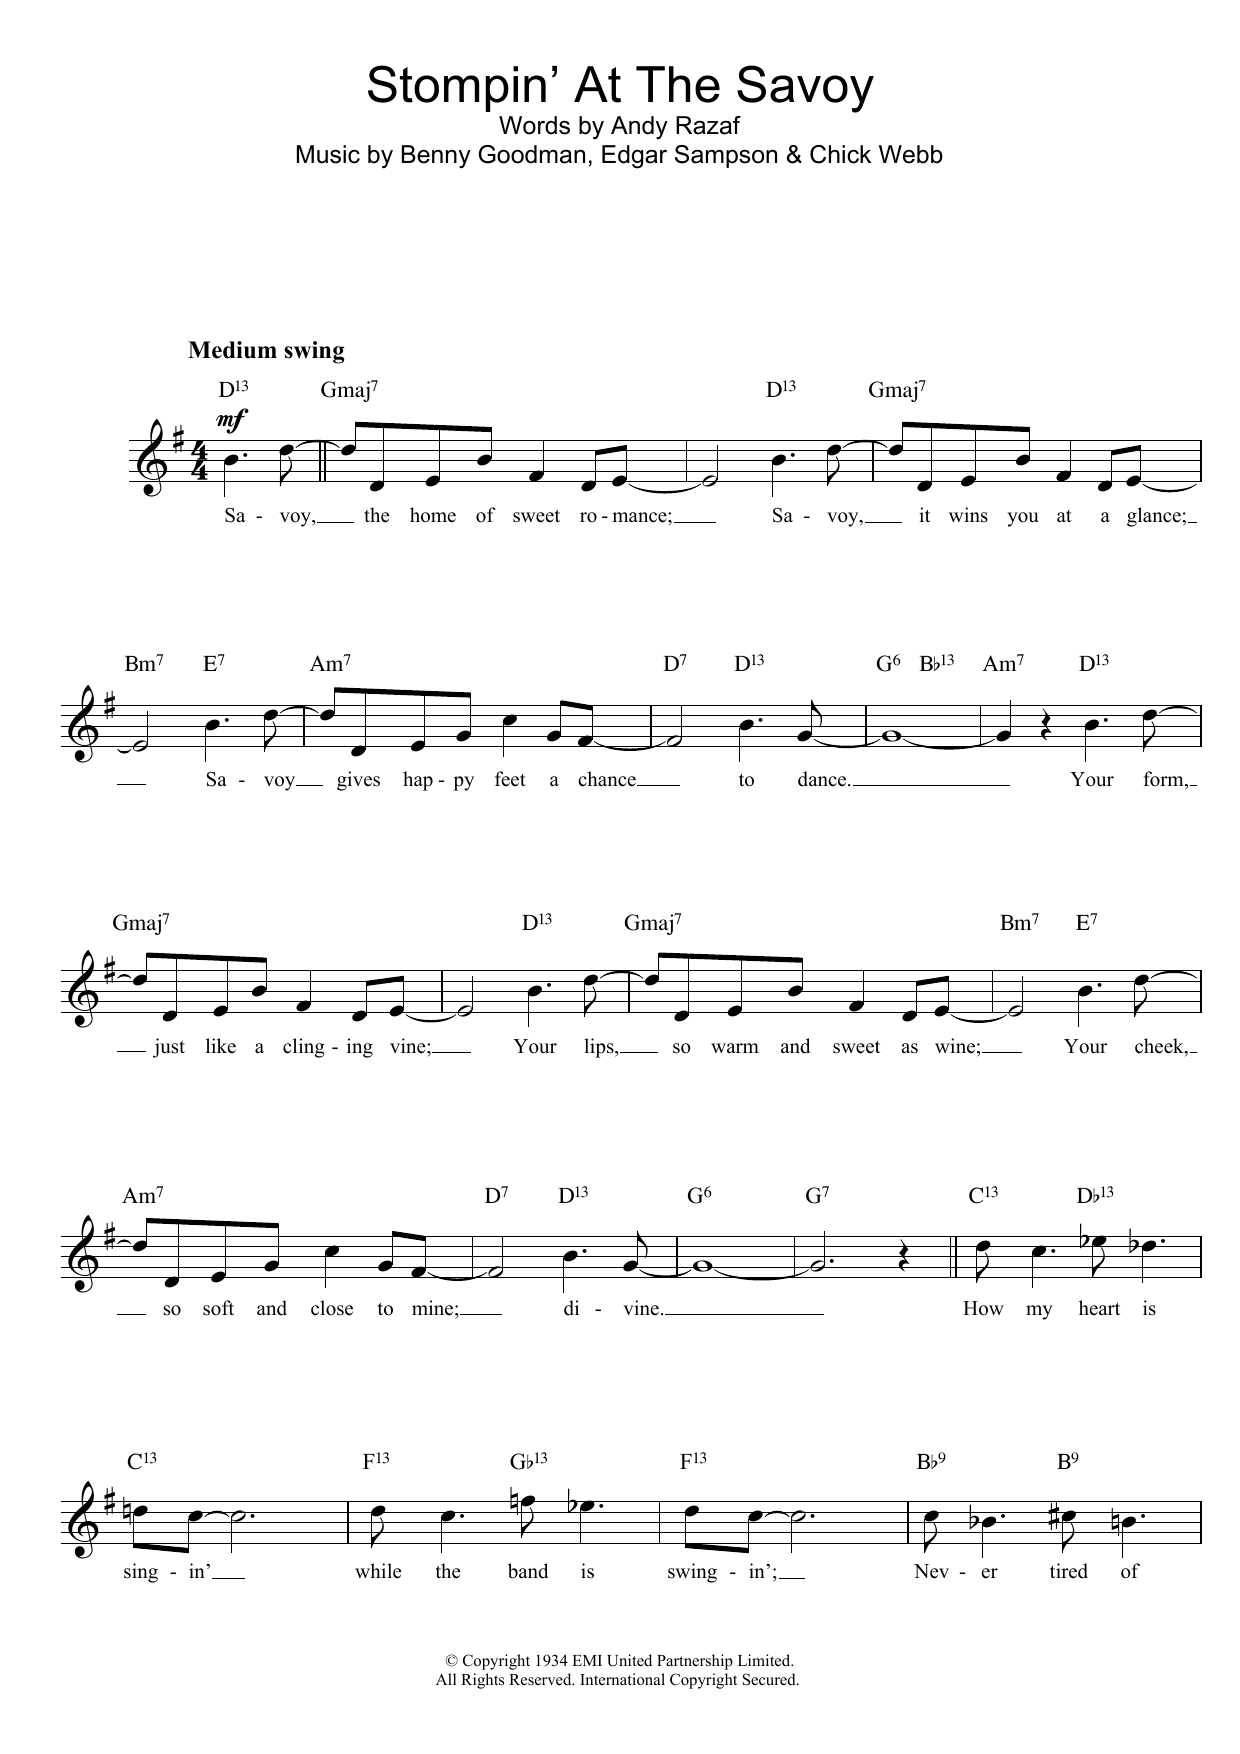 Benny Goodman Stompin' At The Savoy Sheet Music Notes & Chords for Violin - Download or Print PDF